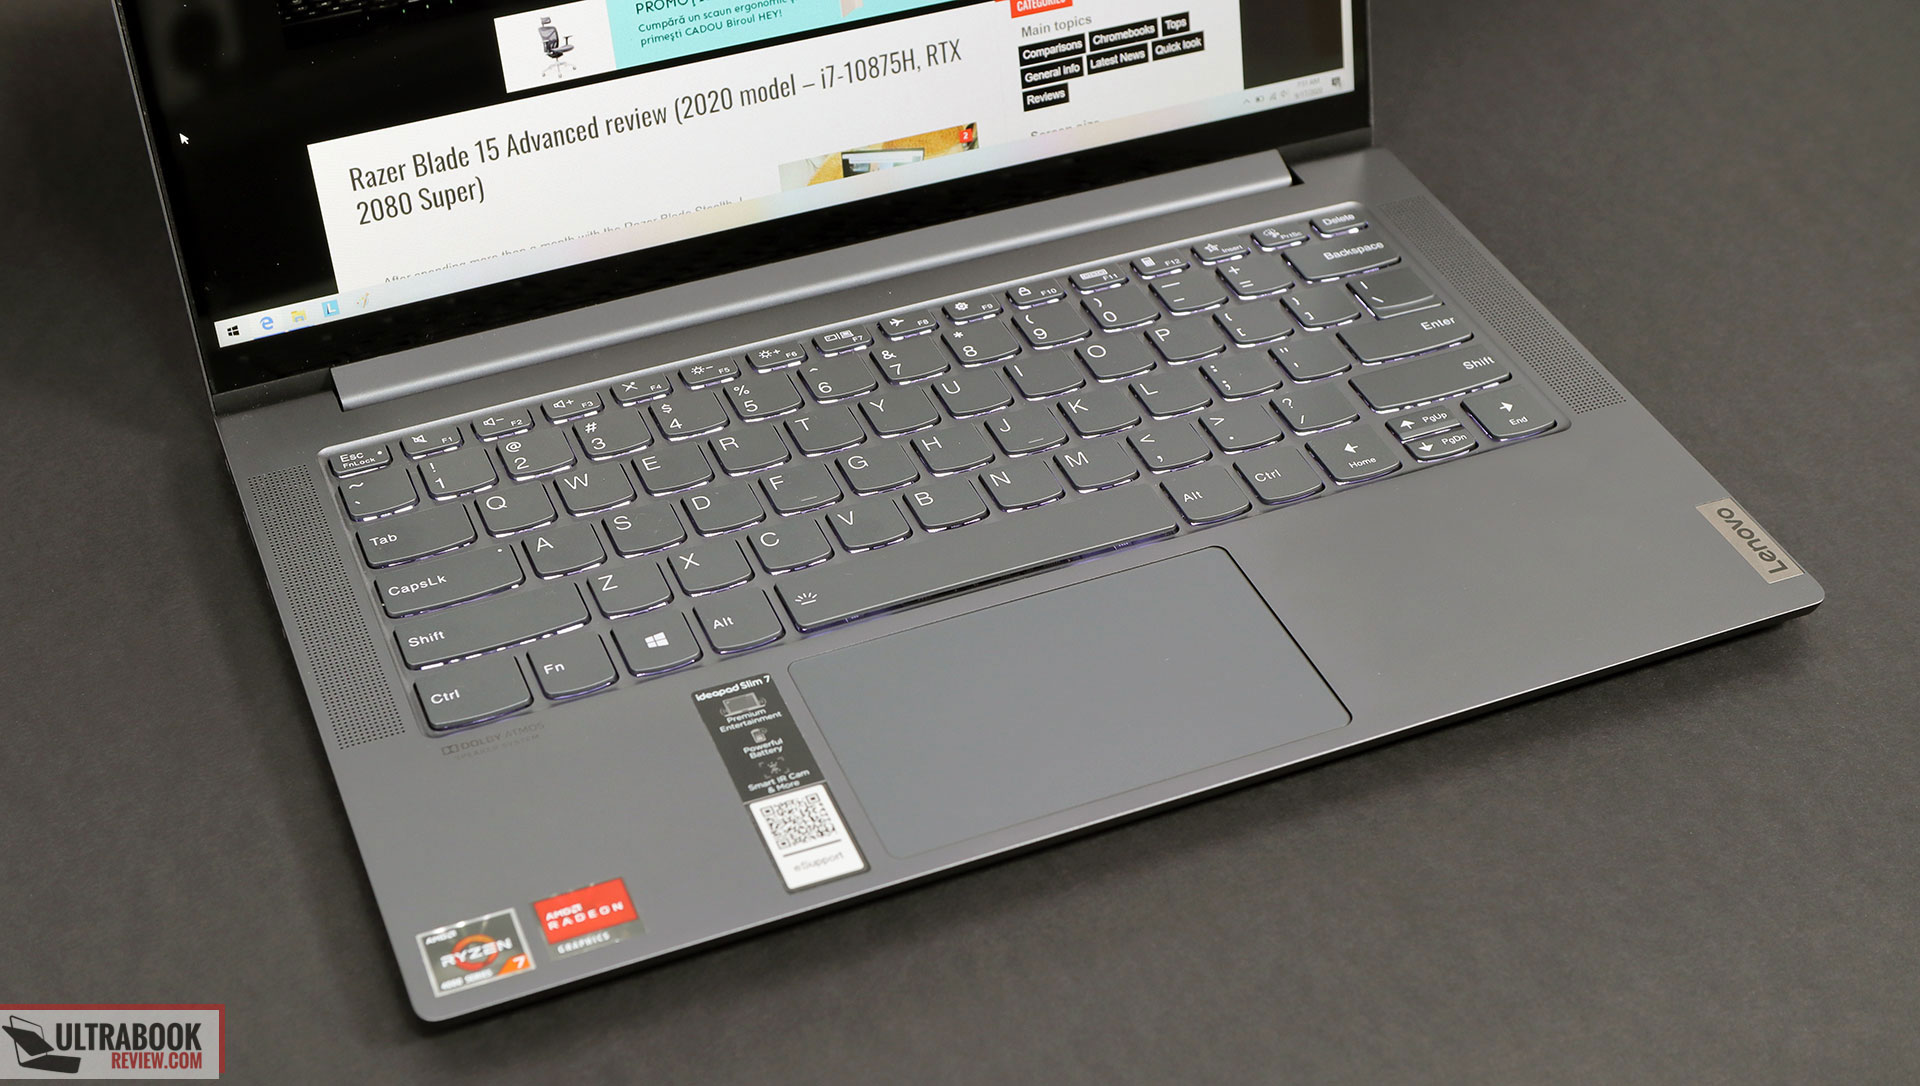 Yoga Slim 7 (14, AMD), Slim 14” AMD-powered laptop